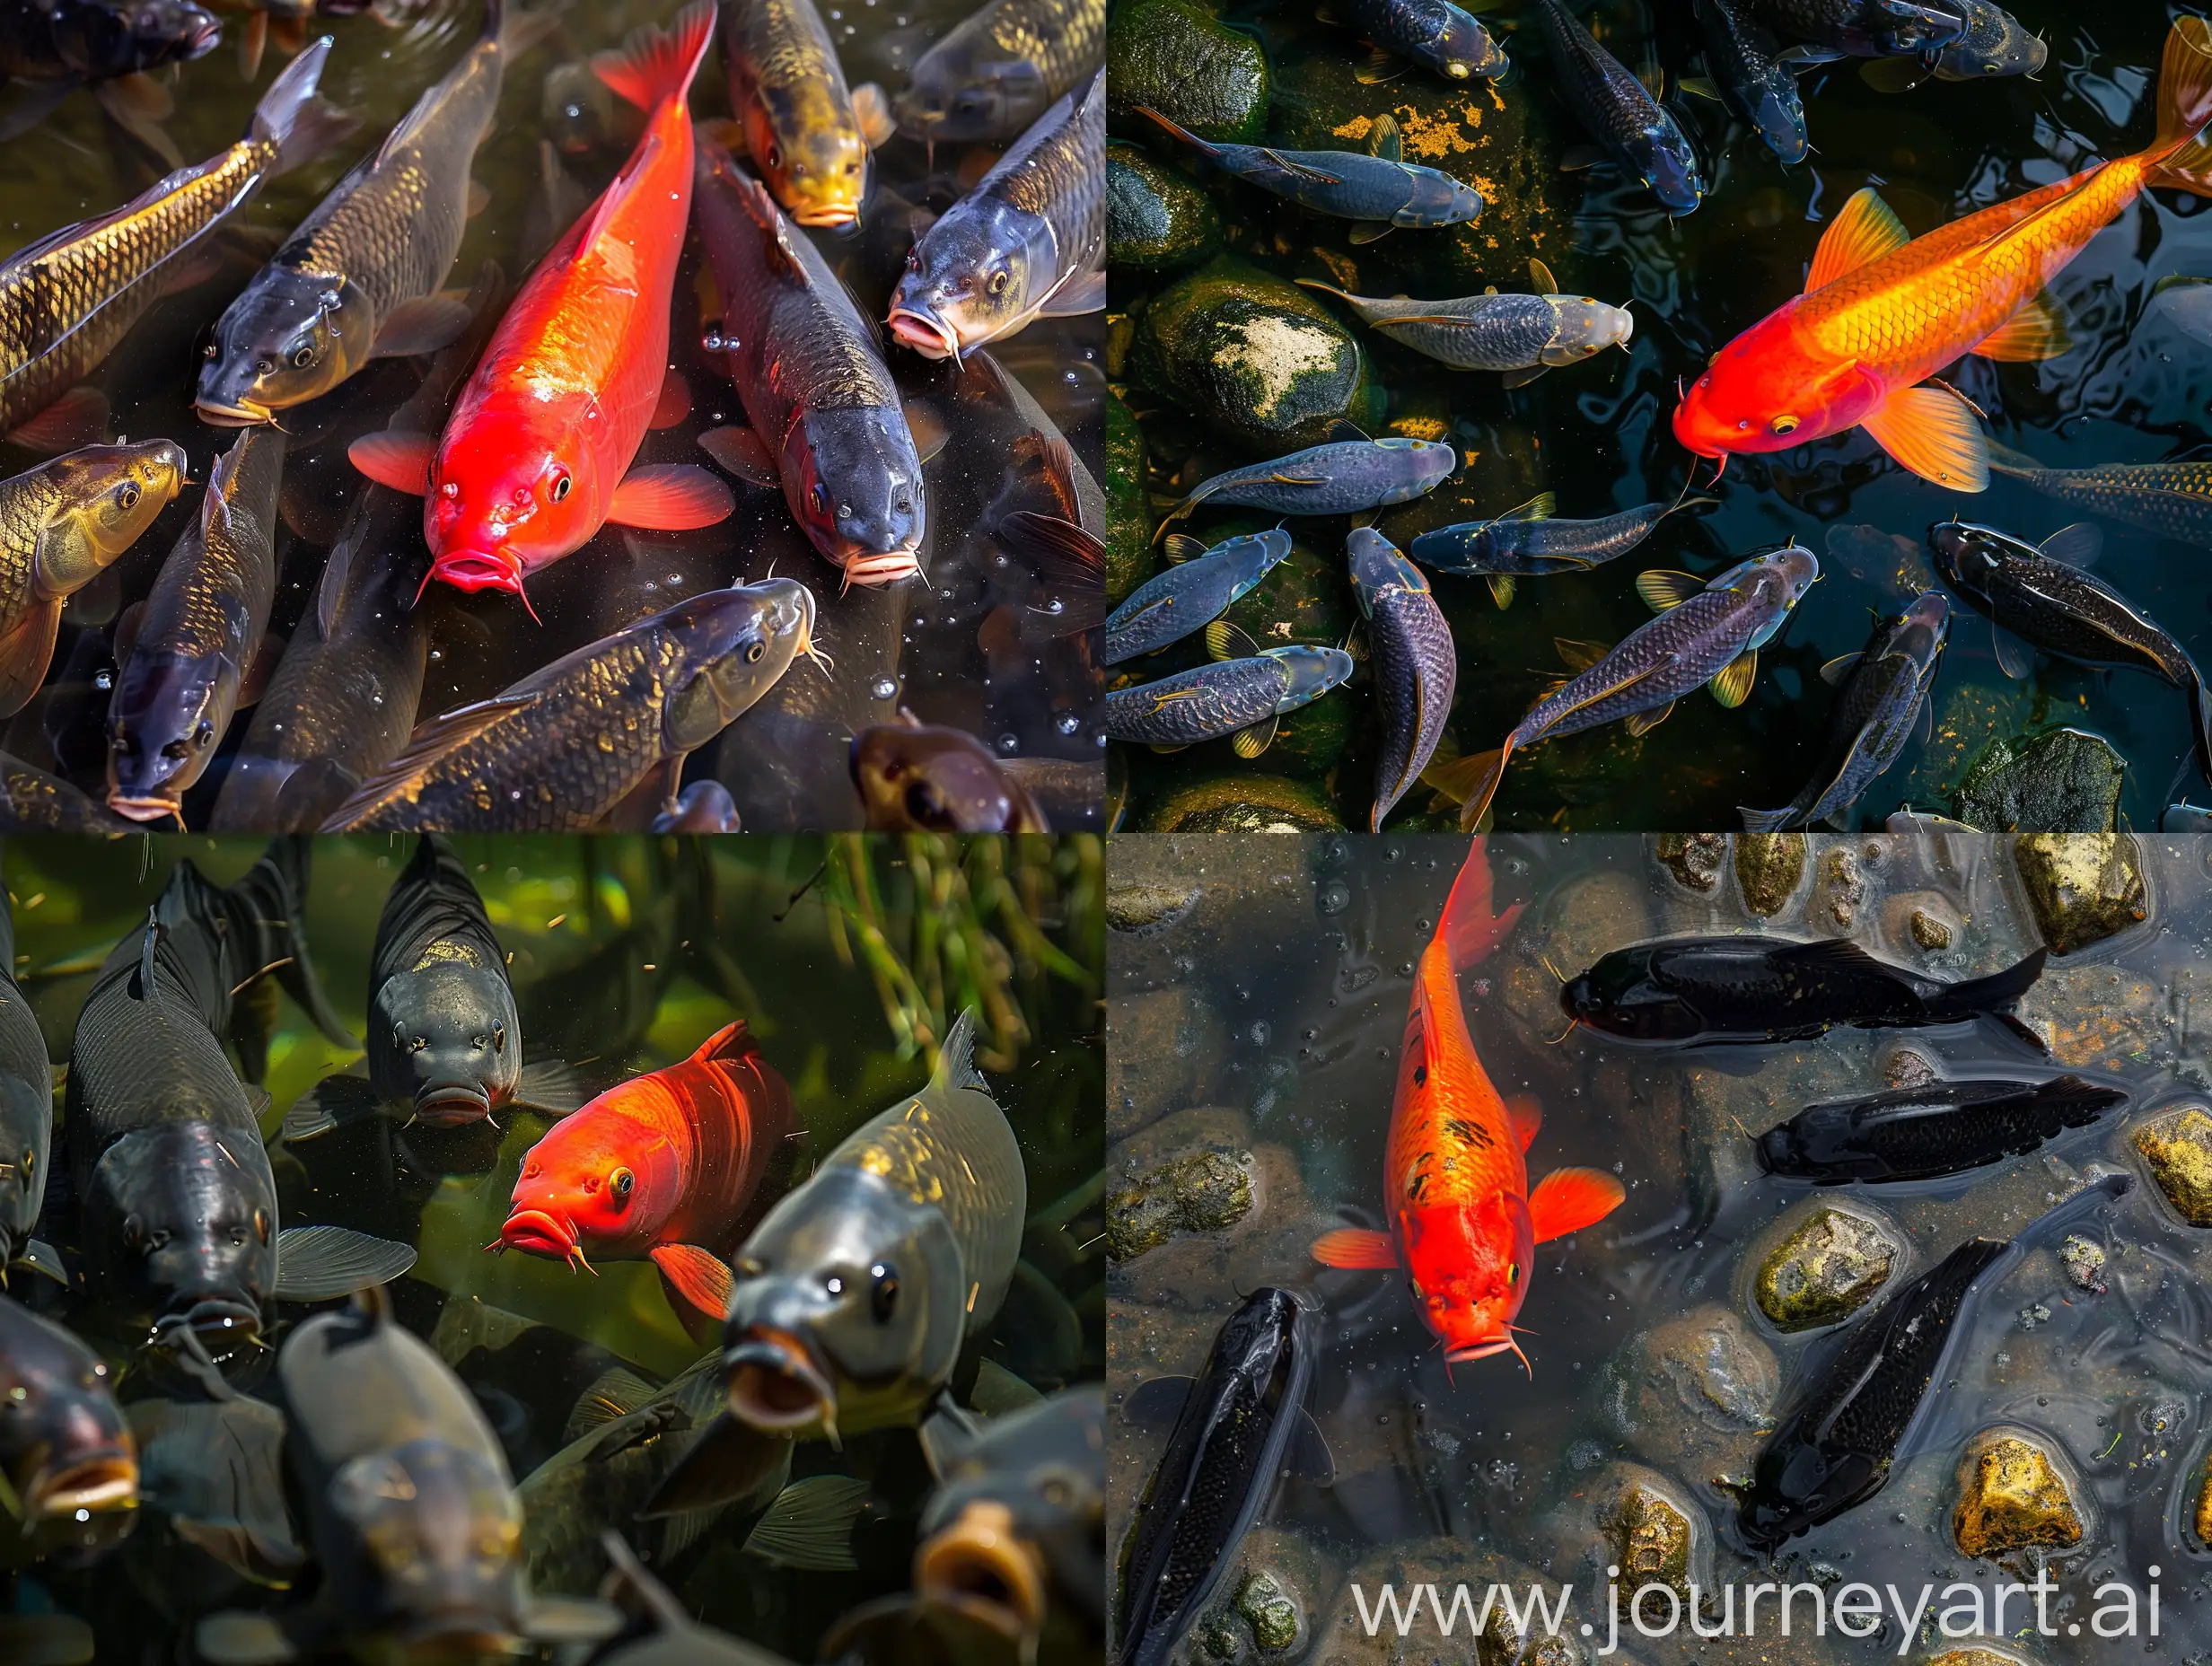 Vibrant-Red-Carp-Swimming-Among-Black-Carps-in-Serene-Pond